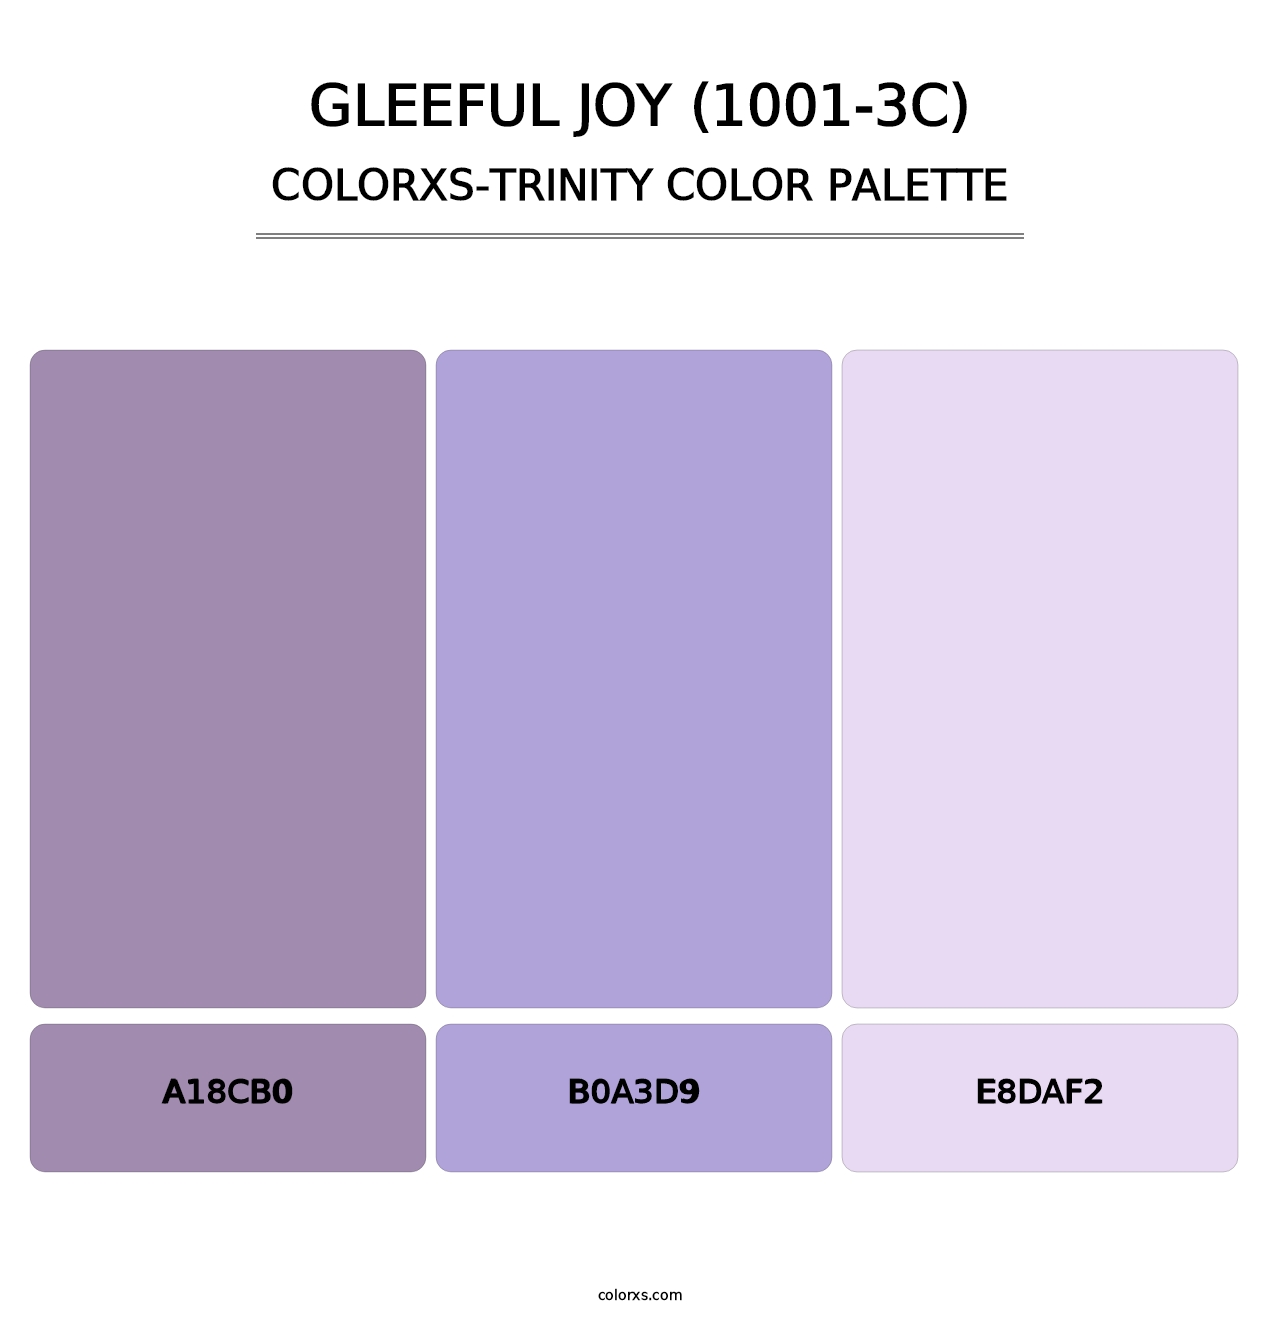 Gleeful Joy (1001-3C) - Colorxs Trinity Palette